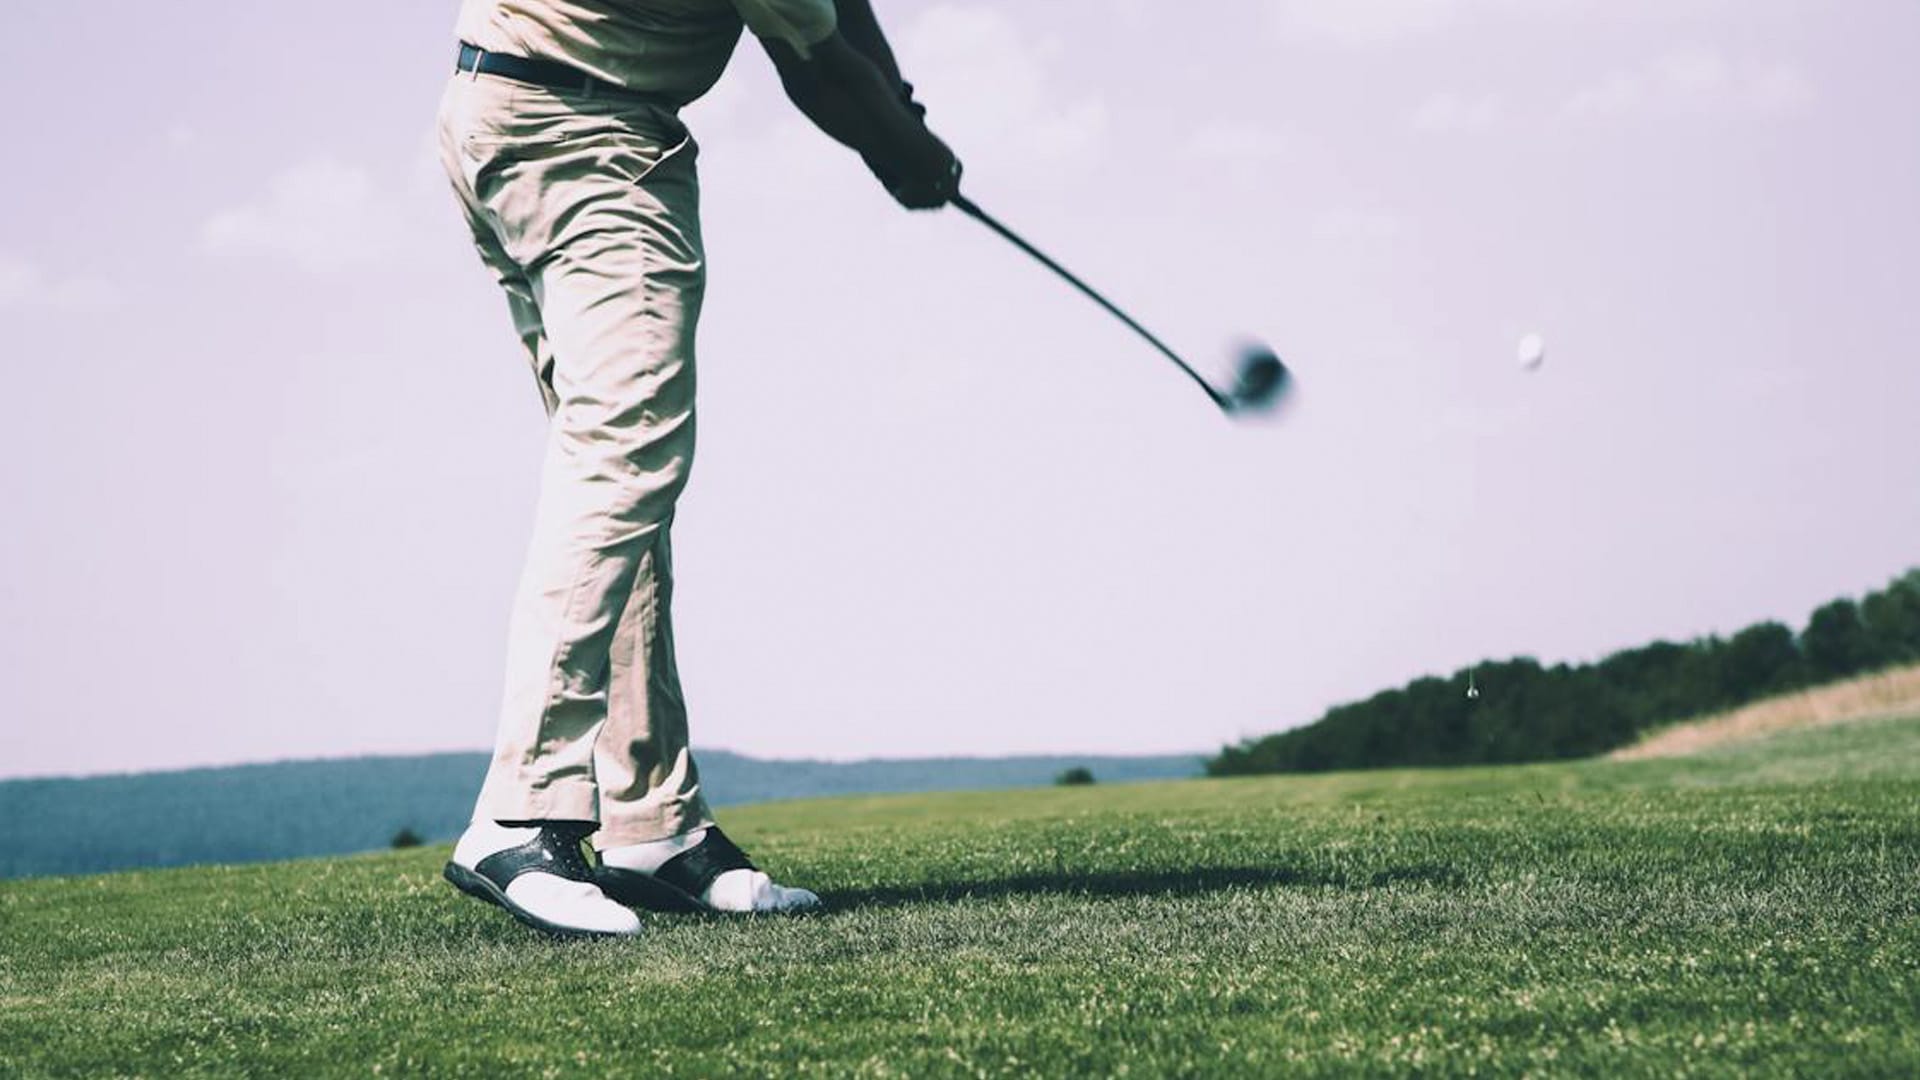 A golfer striking a golf ball